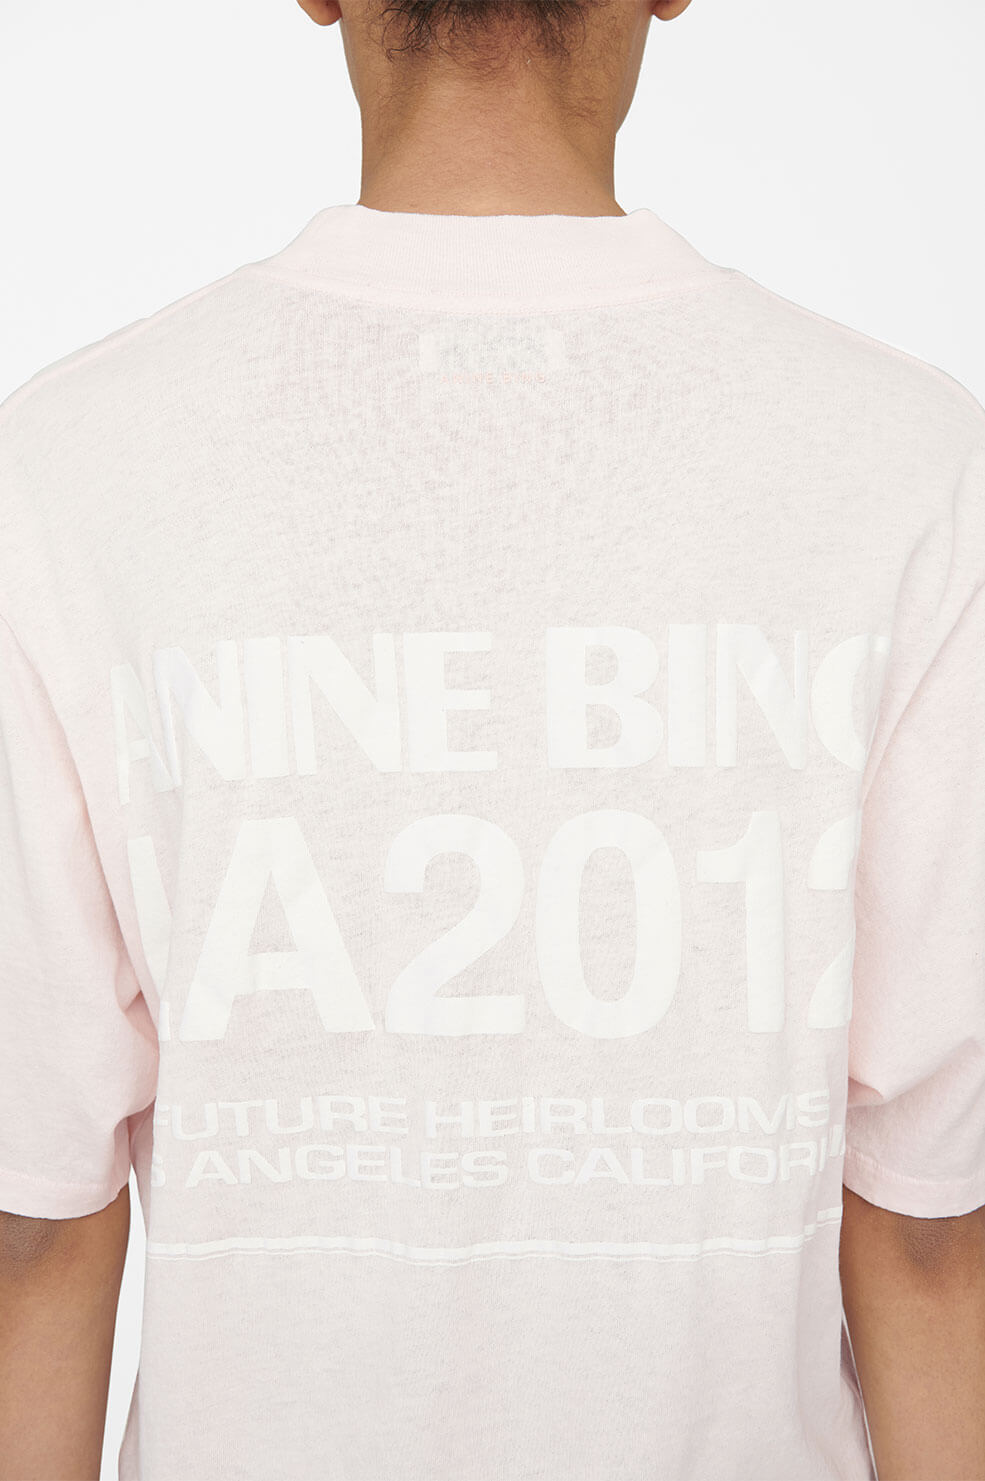 Anine Bing - Wes Tee Bing LA in Washed Pink